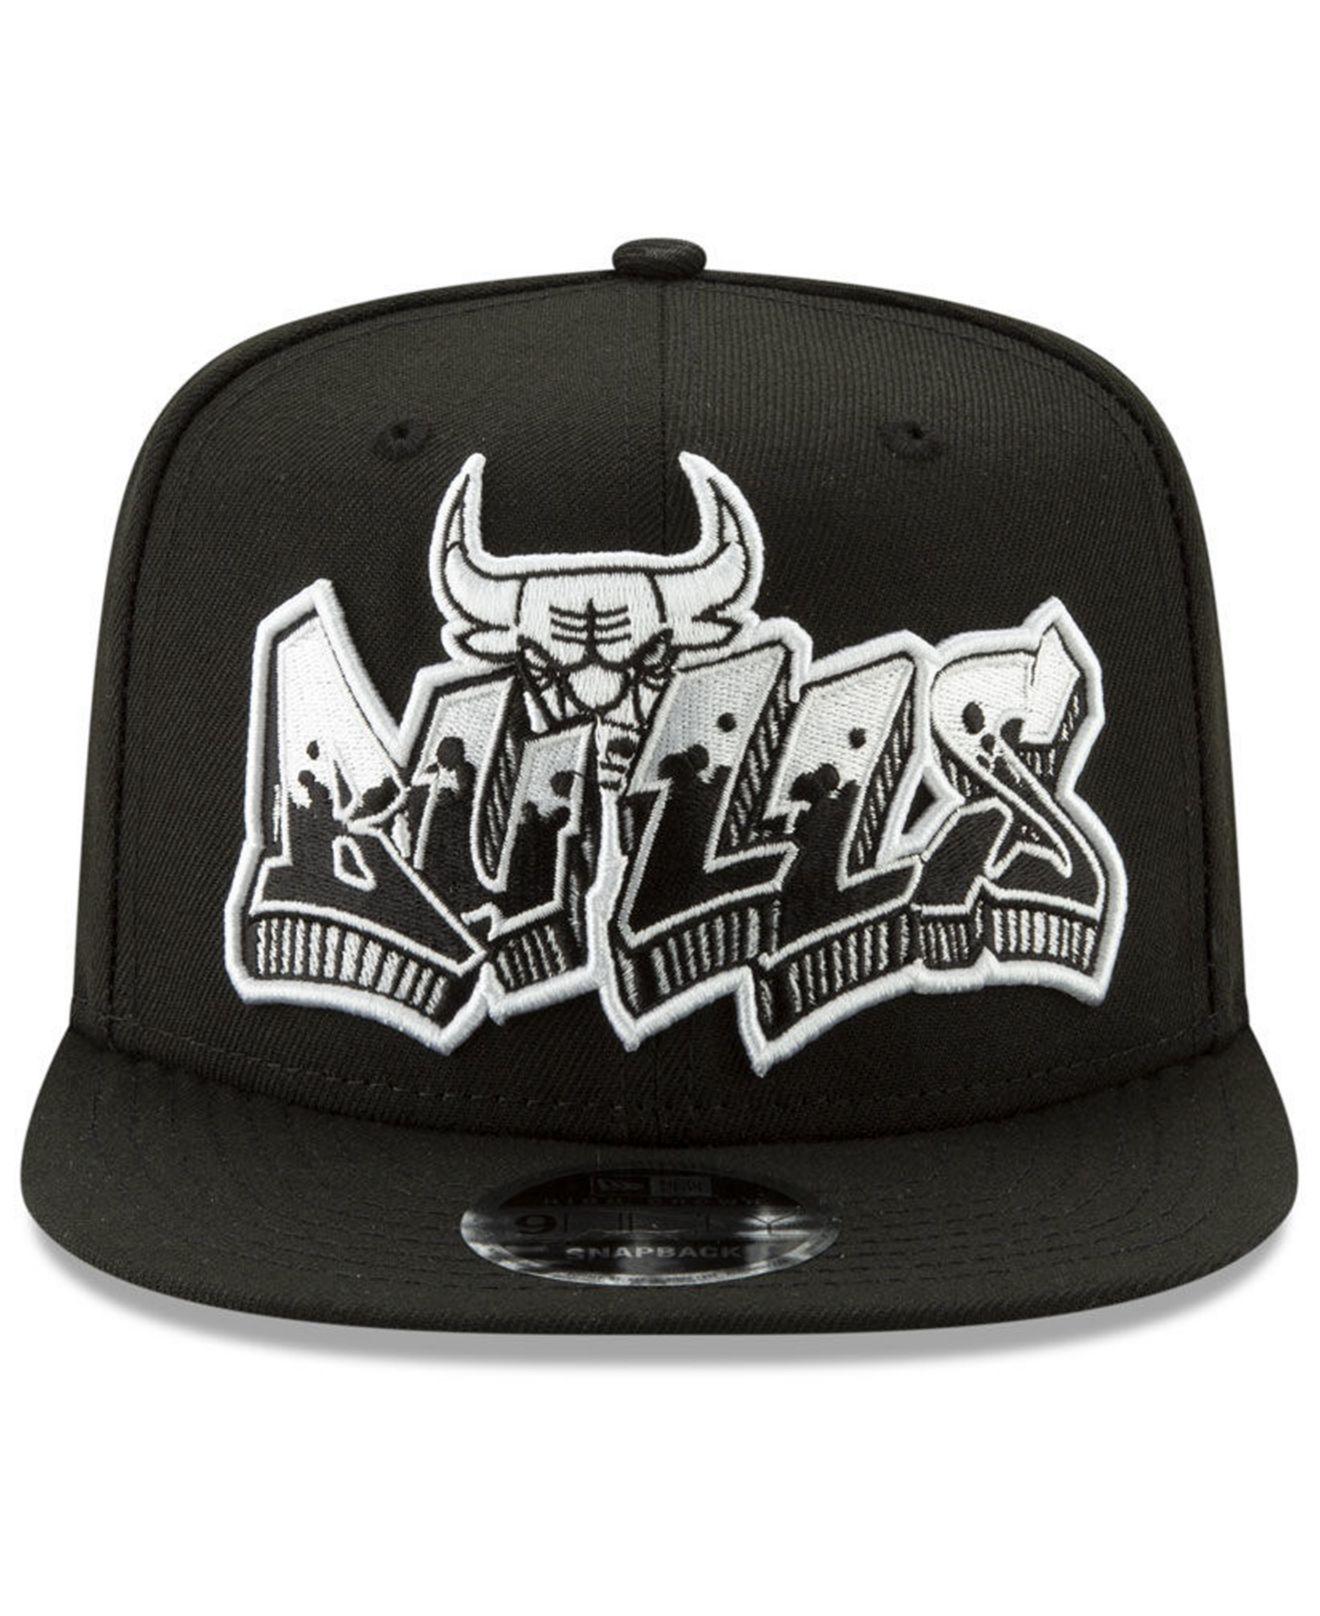 New Era 9FIFTY Chicago Bulls Trucker Snapback Hat Black White